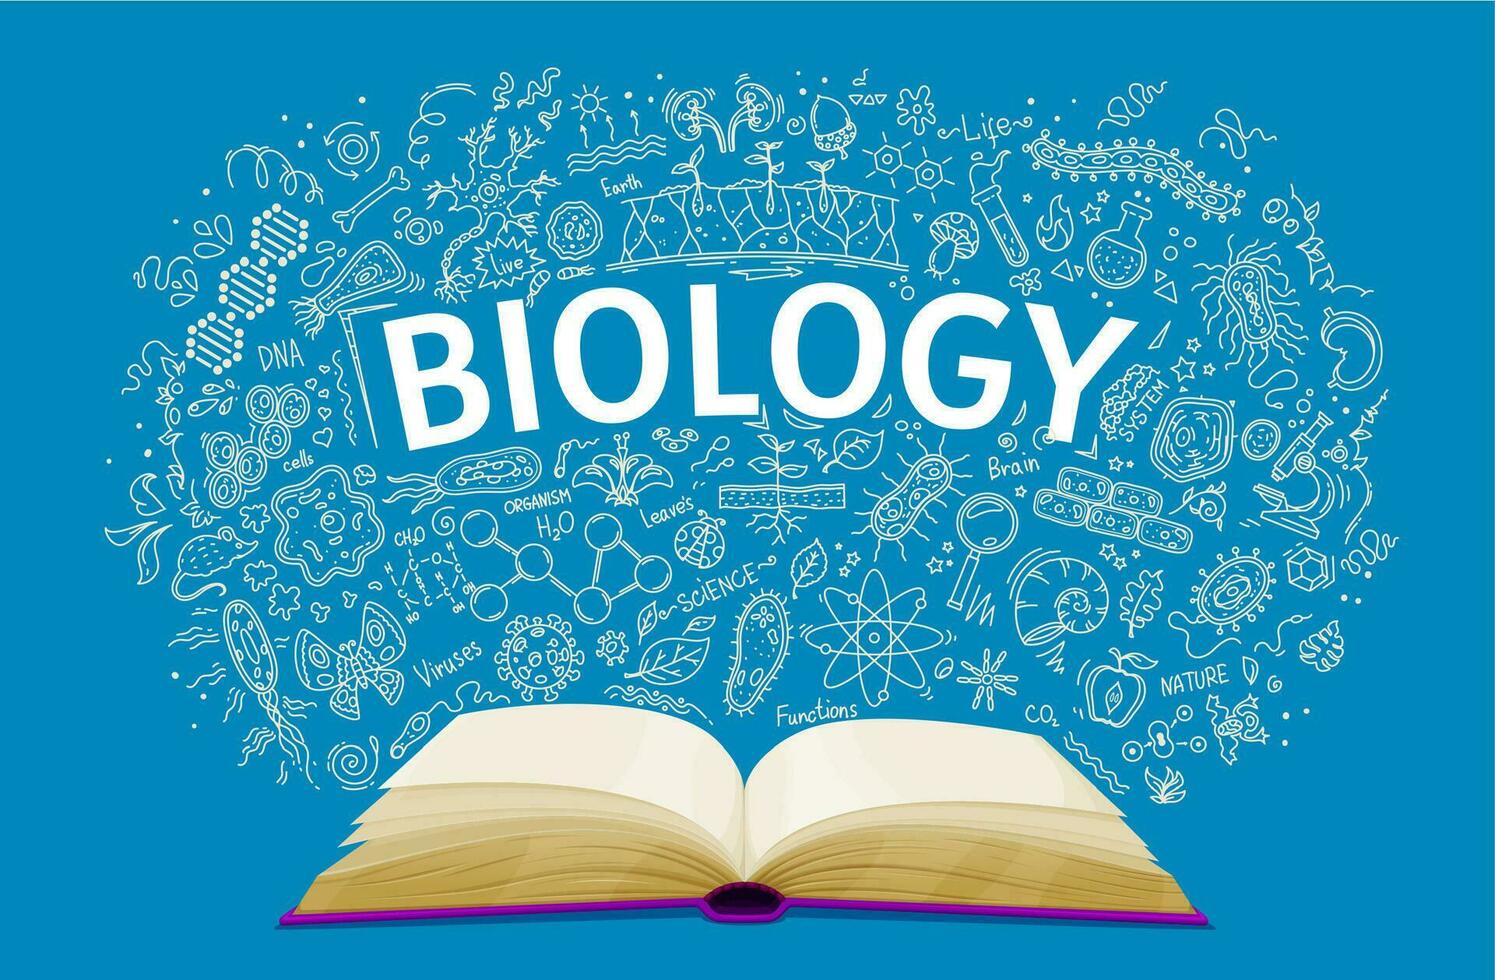 Biology textbook on school chalkboard background vector